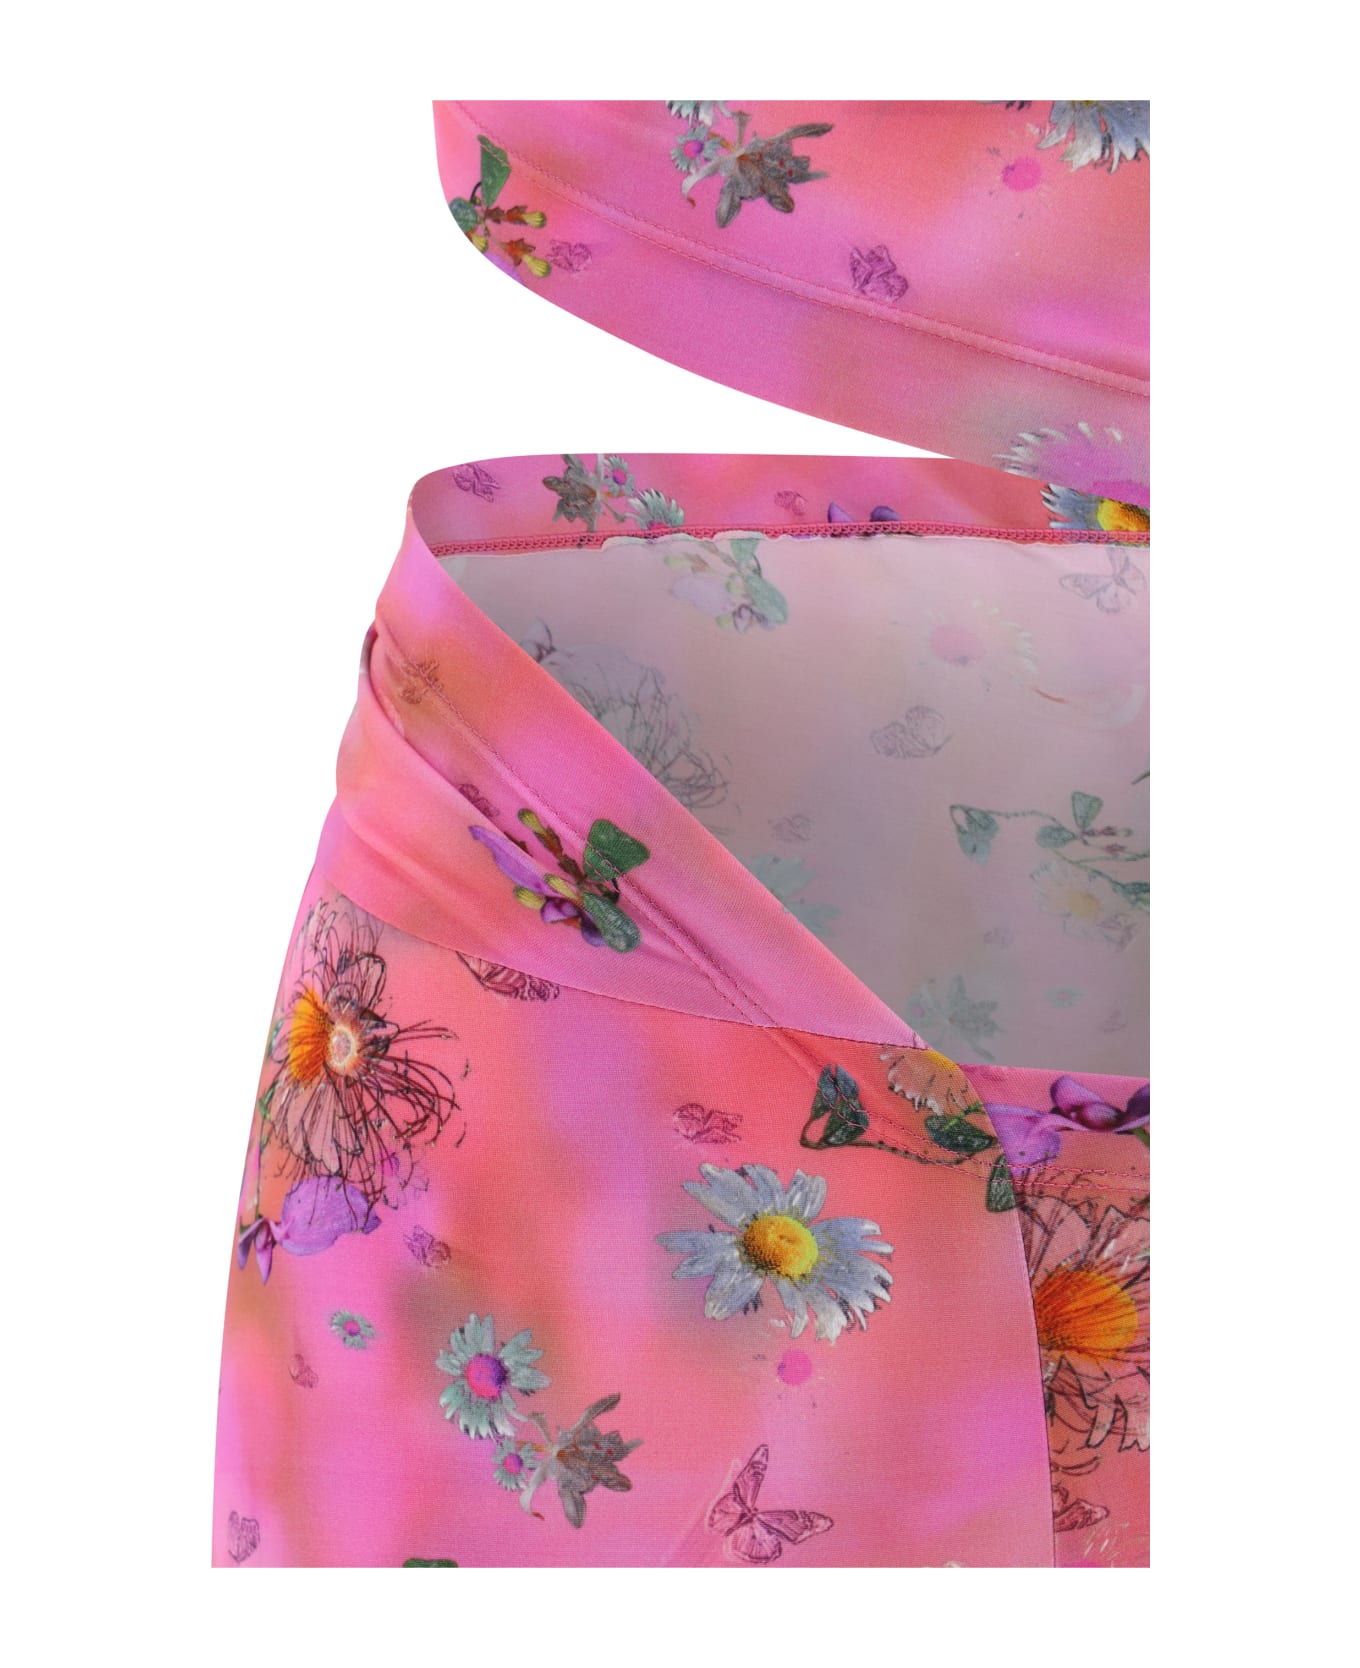 Maccapani Jumpsuit Dress - Stampa Fondo Rosa